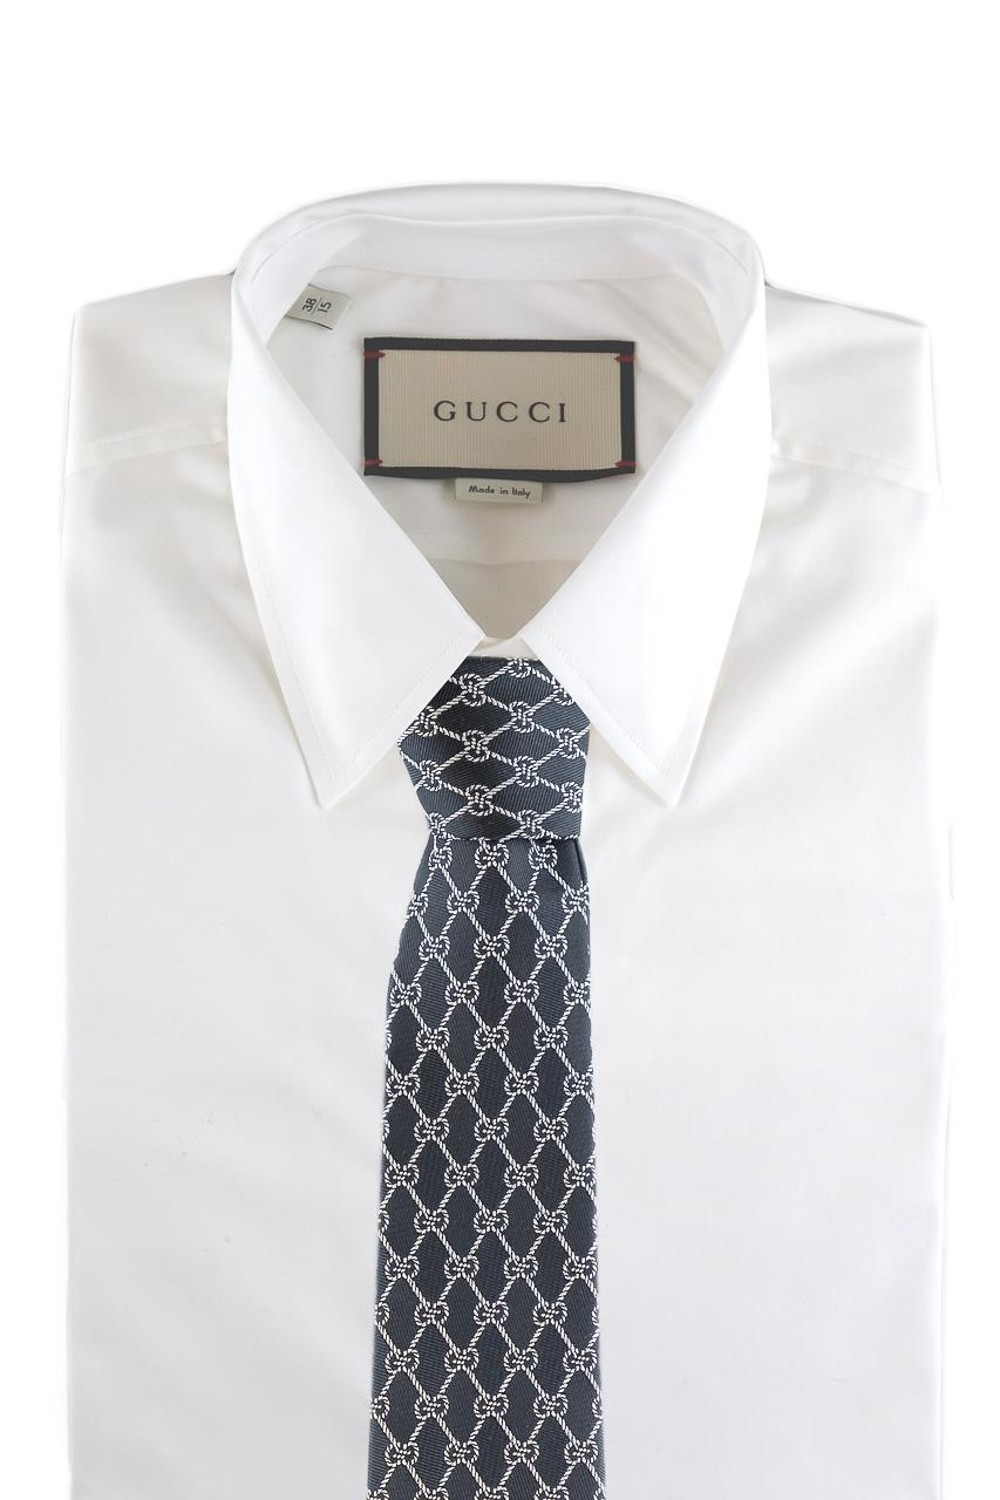 shop GUCCI Saldi Cravatta: Gucci cravatta in seta nera motivo catene GG avorio.
L 7cm x A 146cm.
100% seta.
Made in Italy.. 495312 4E002-1078 number 2488119